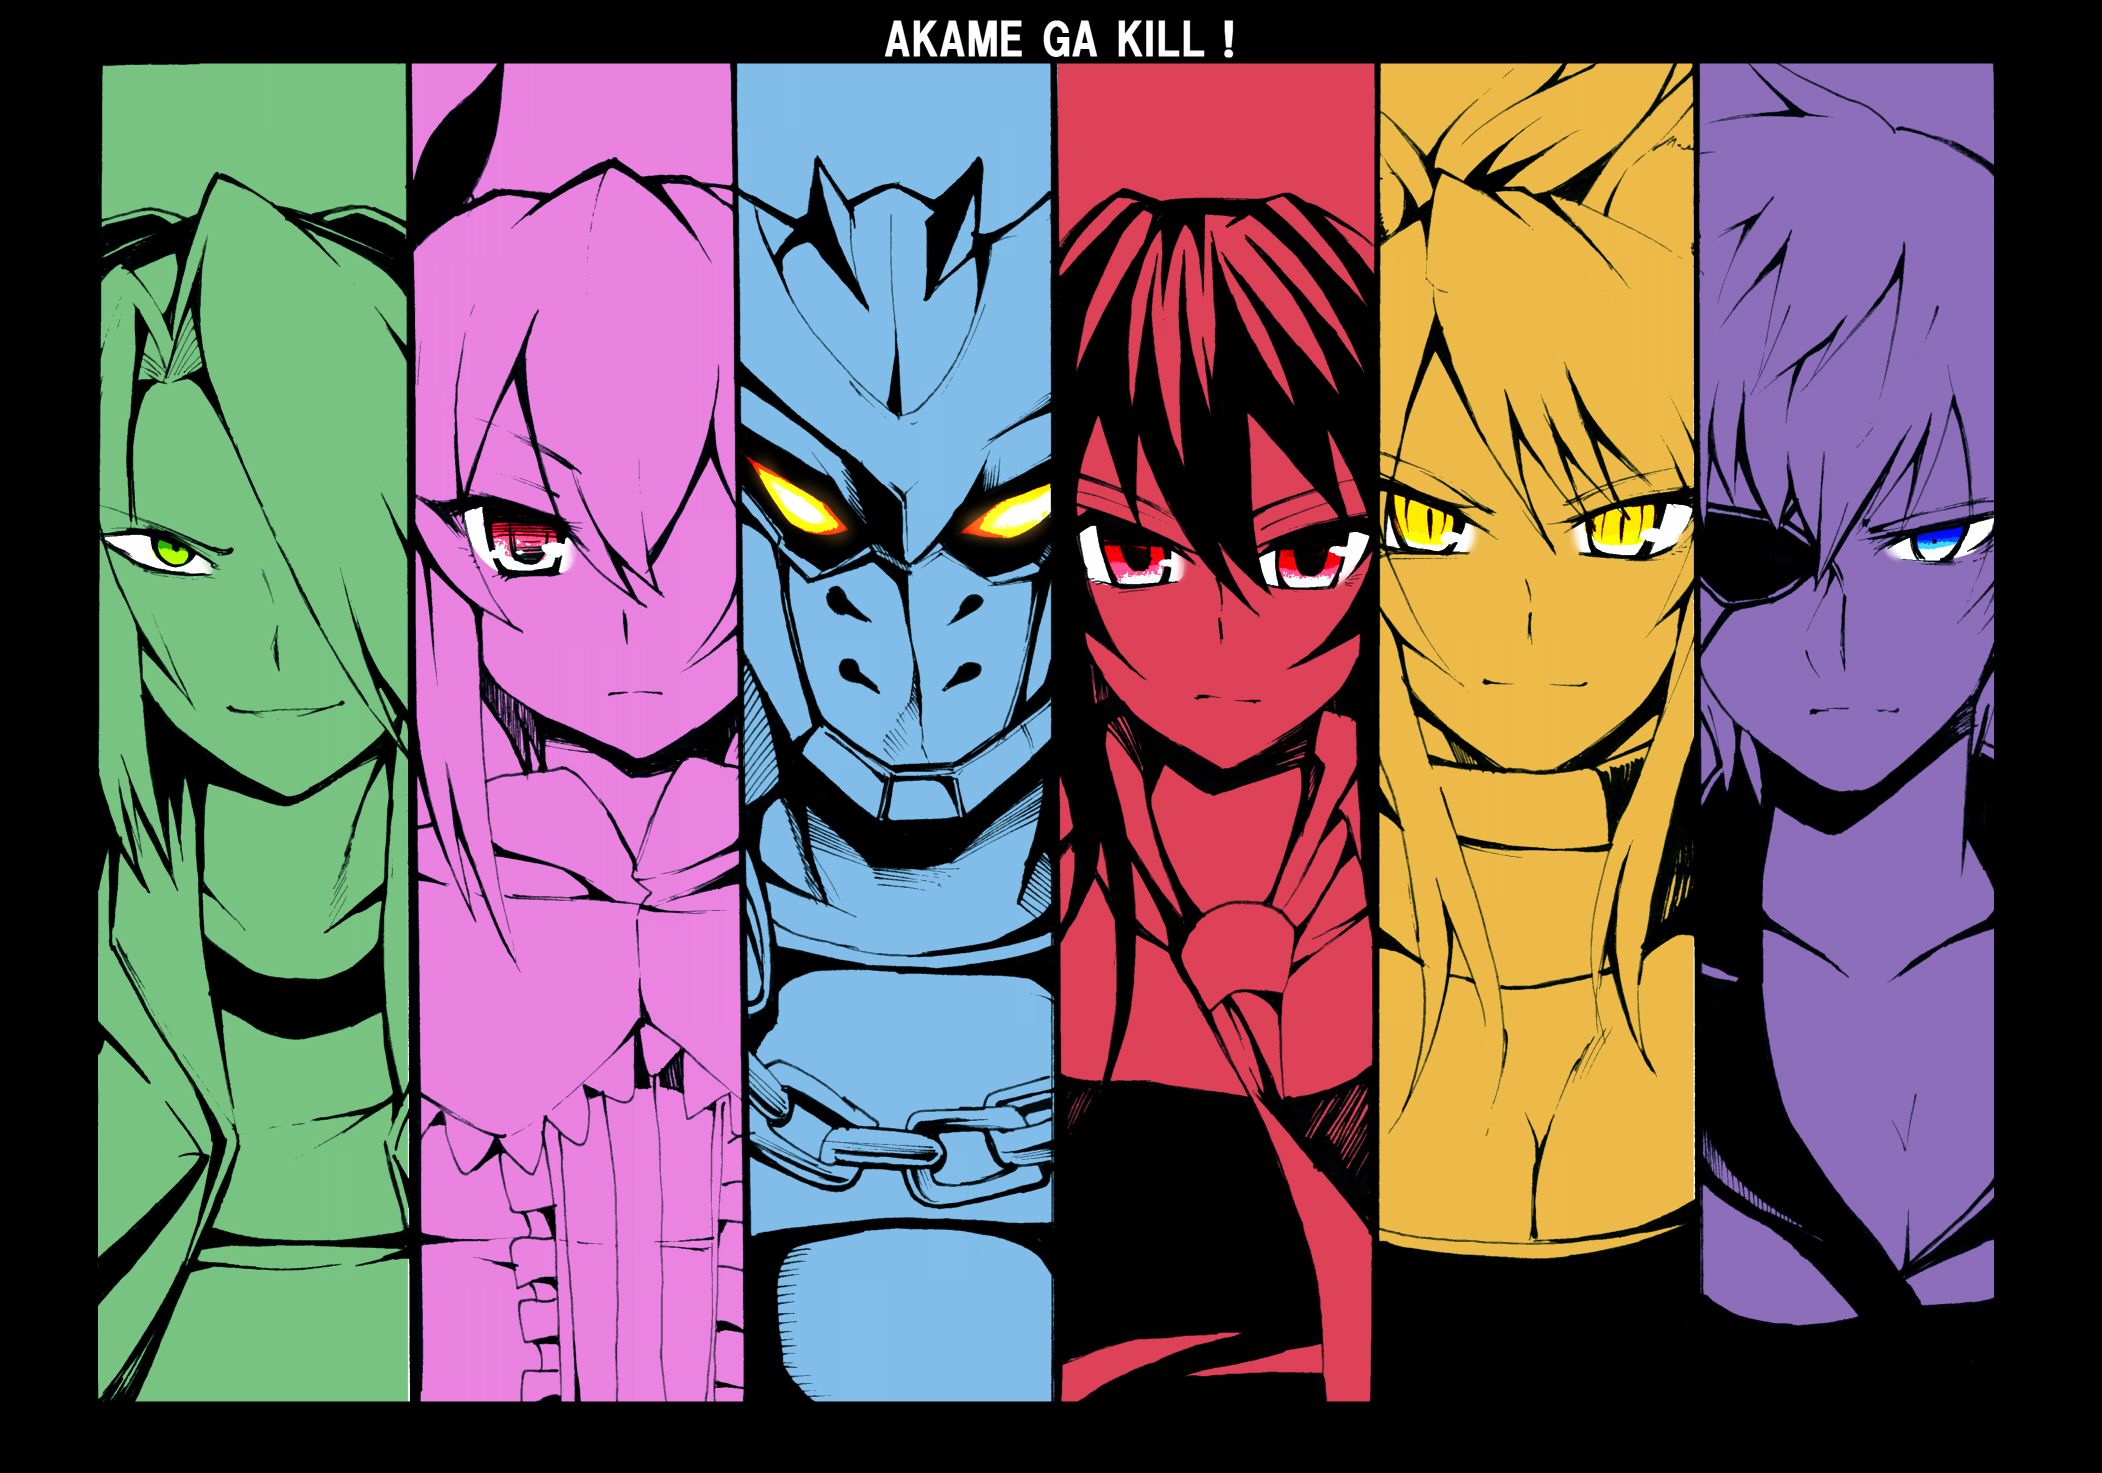 Leone (Akame ga Kill!) Anime Image Board